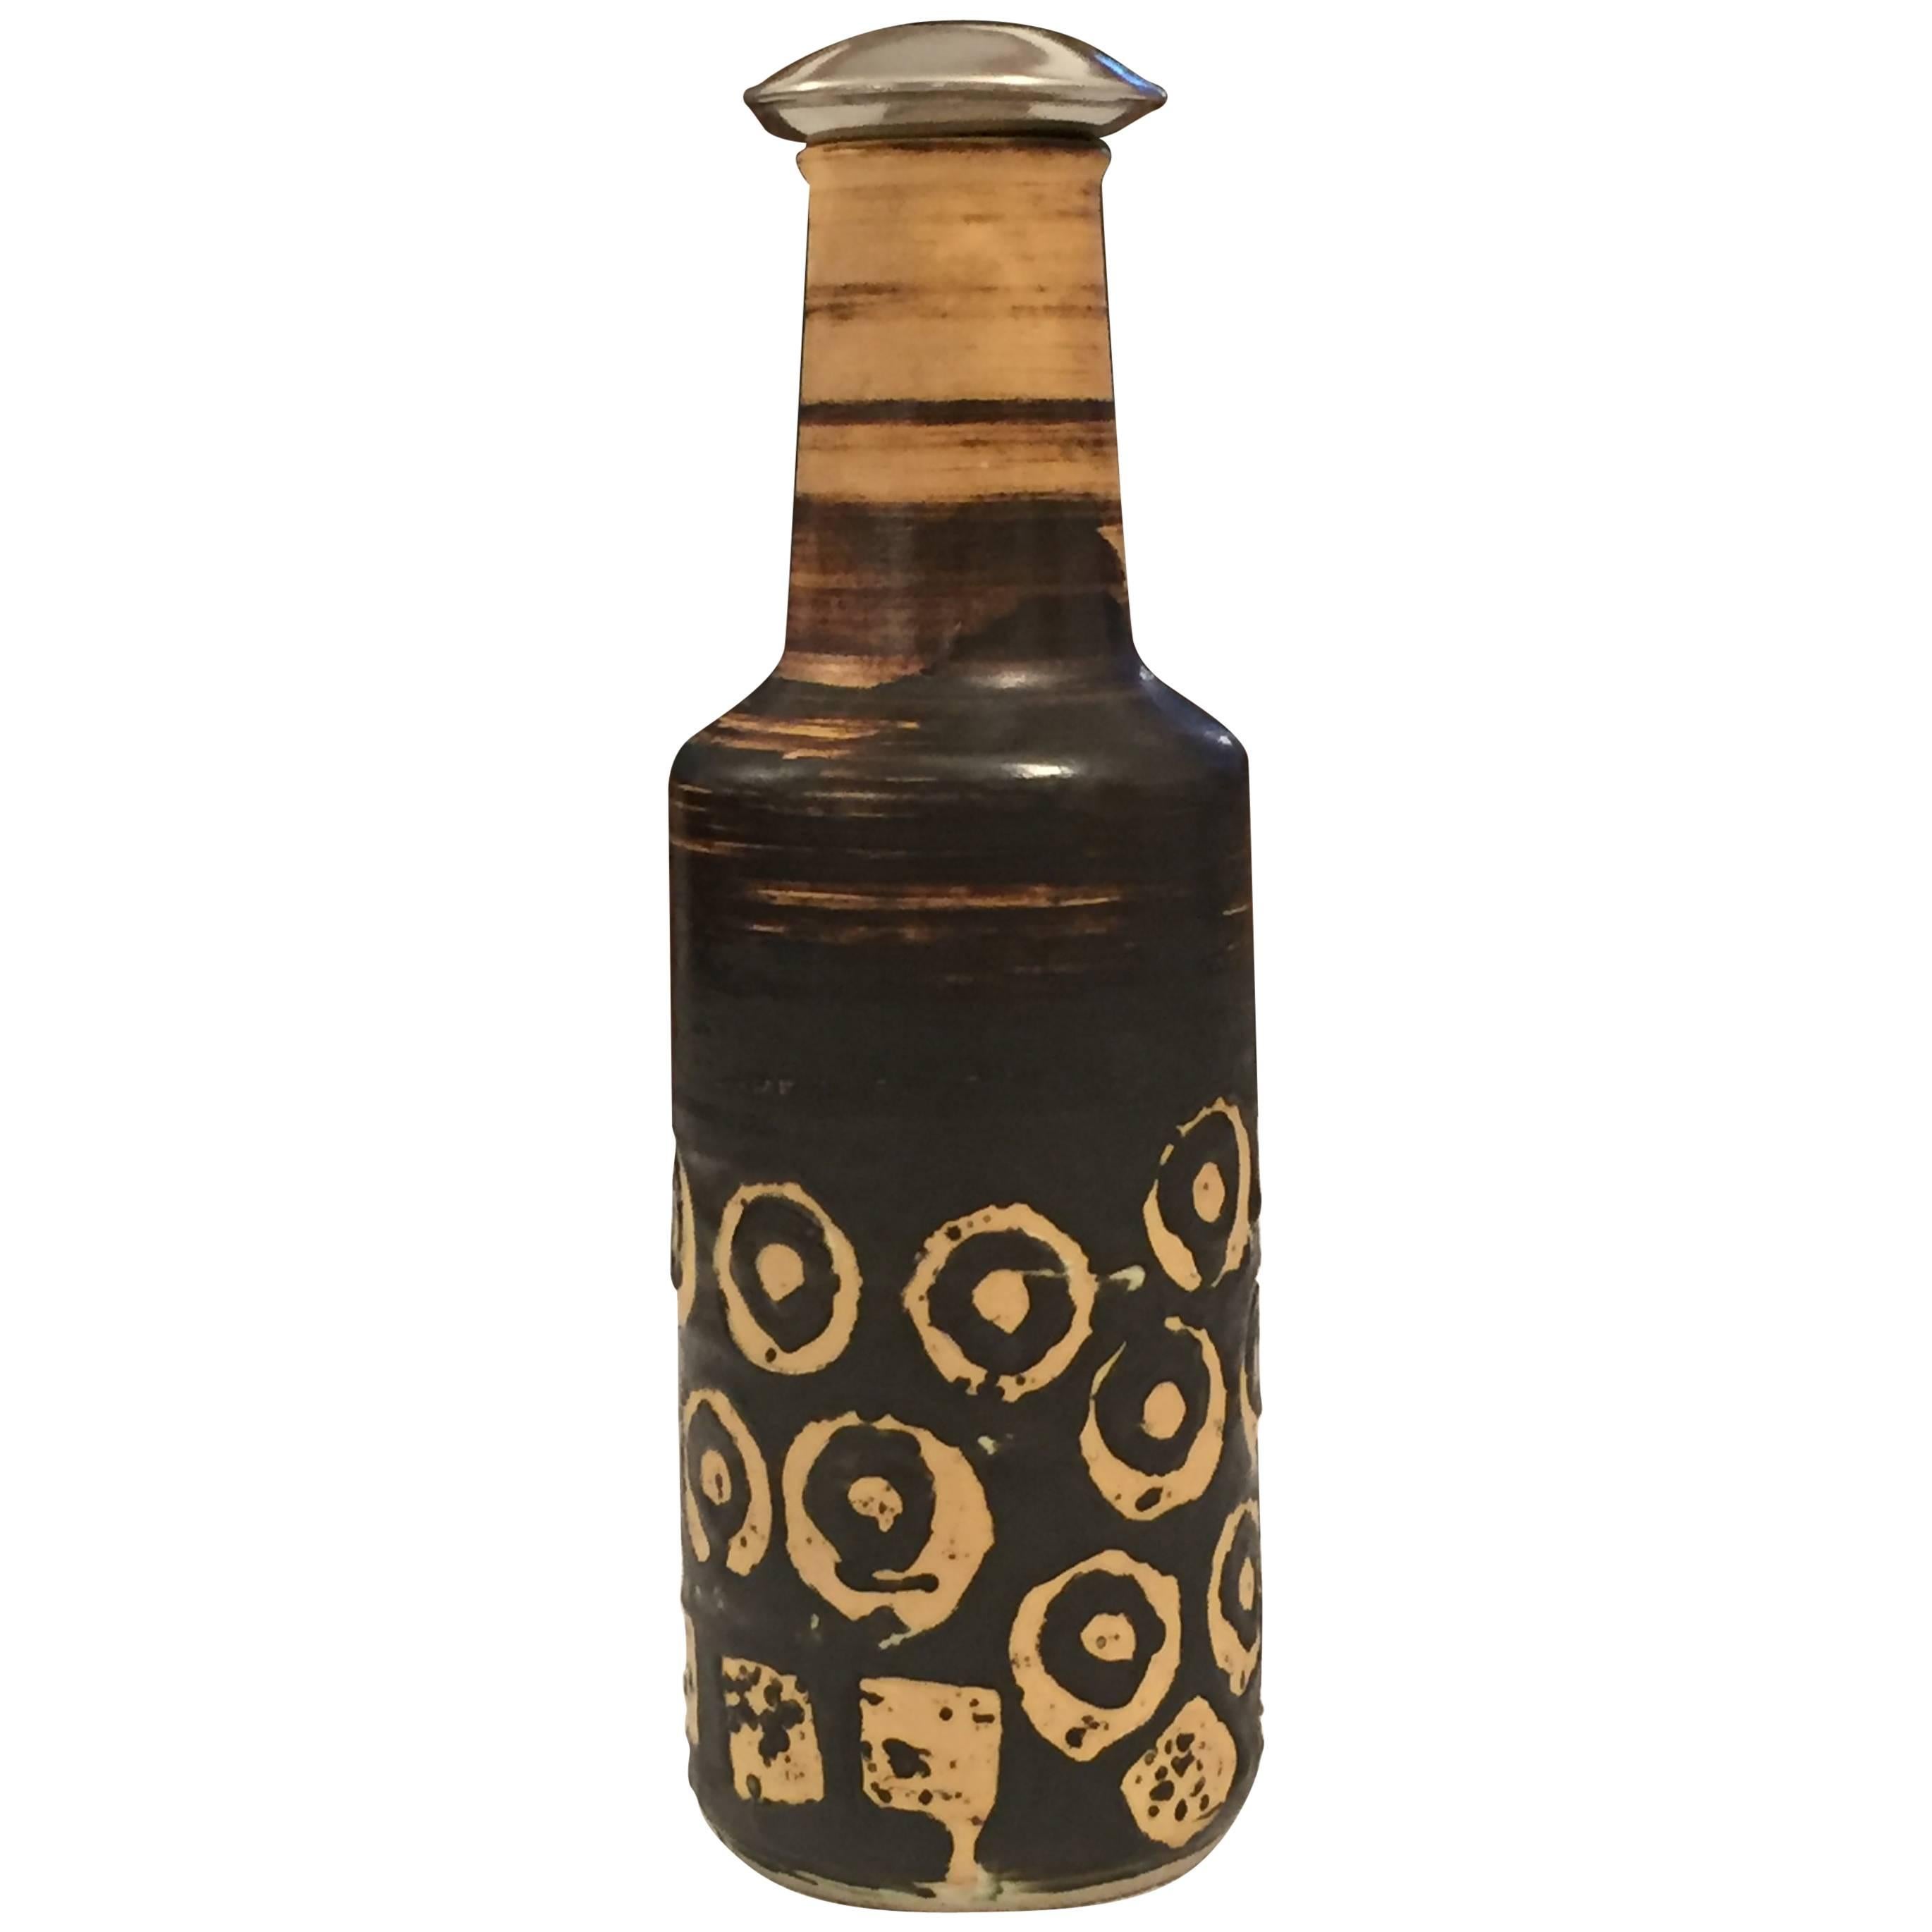 Ceramic Bottle or Vase with a Cork, Germany 1950s, Lava Glaze